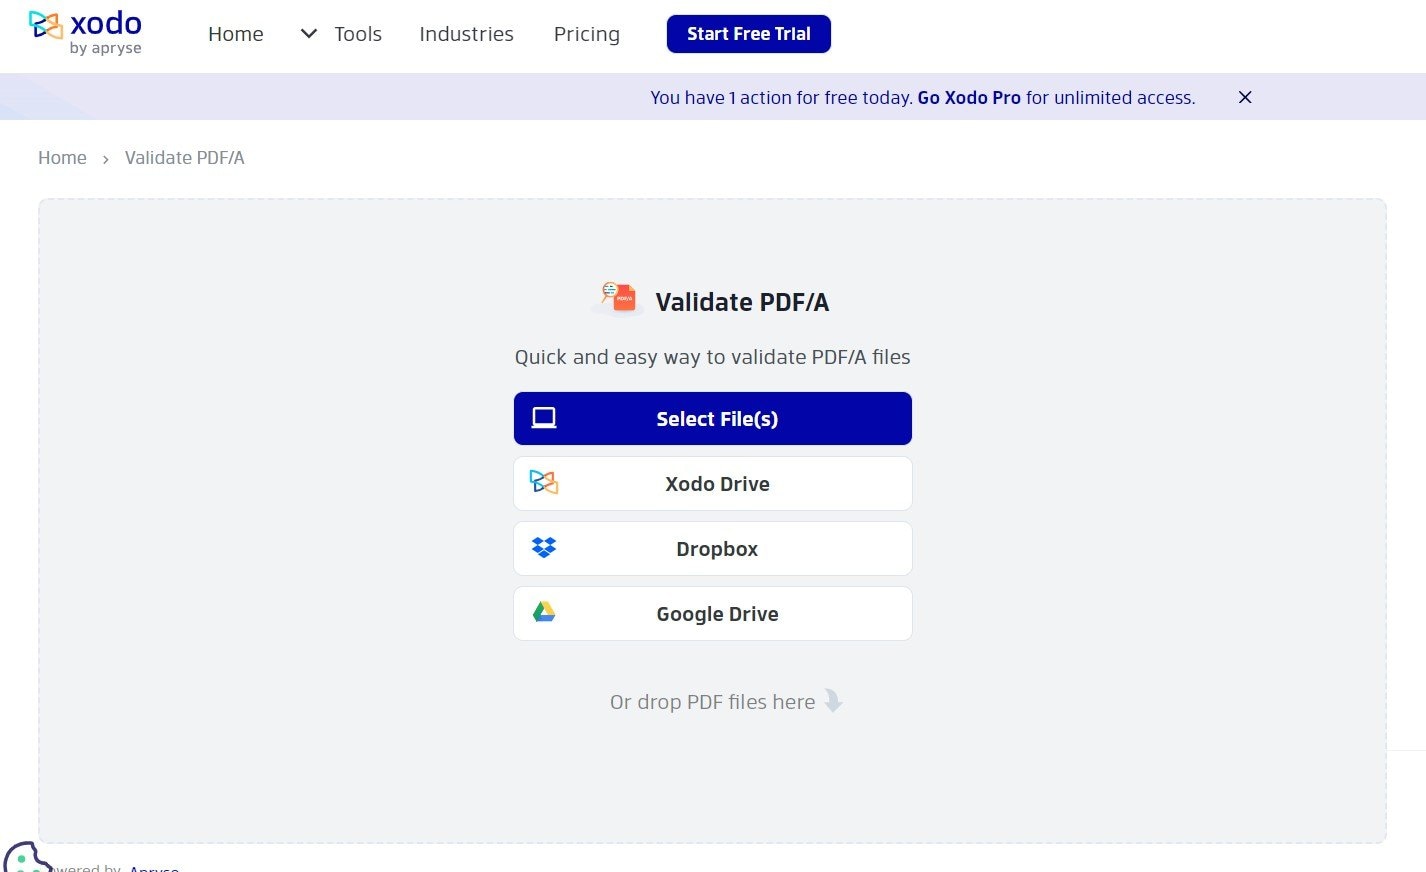 xodo online pdf validation tool